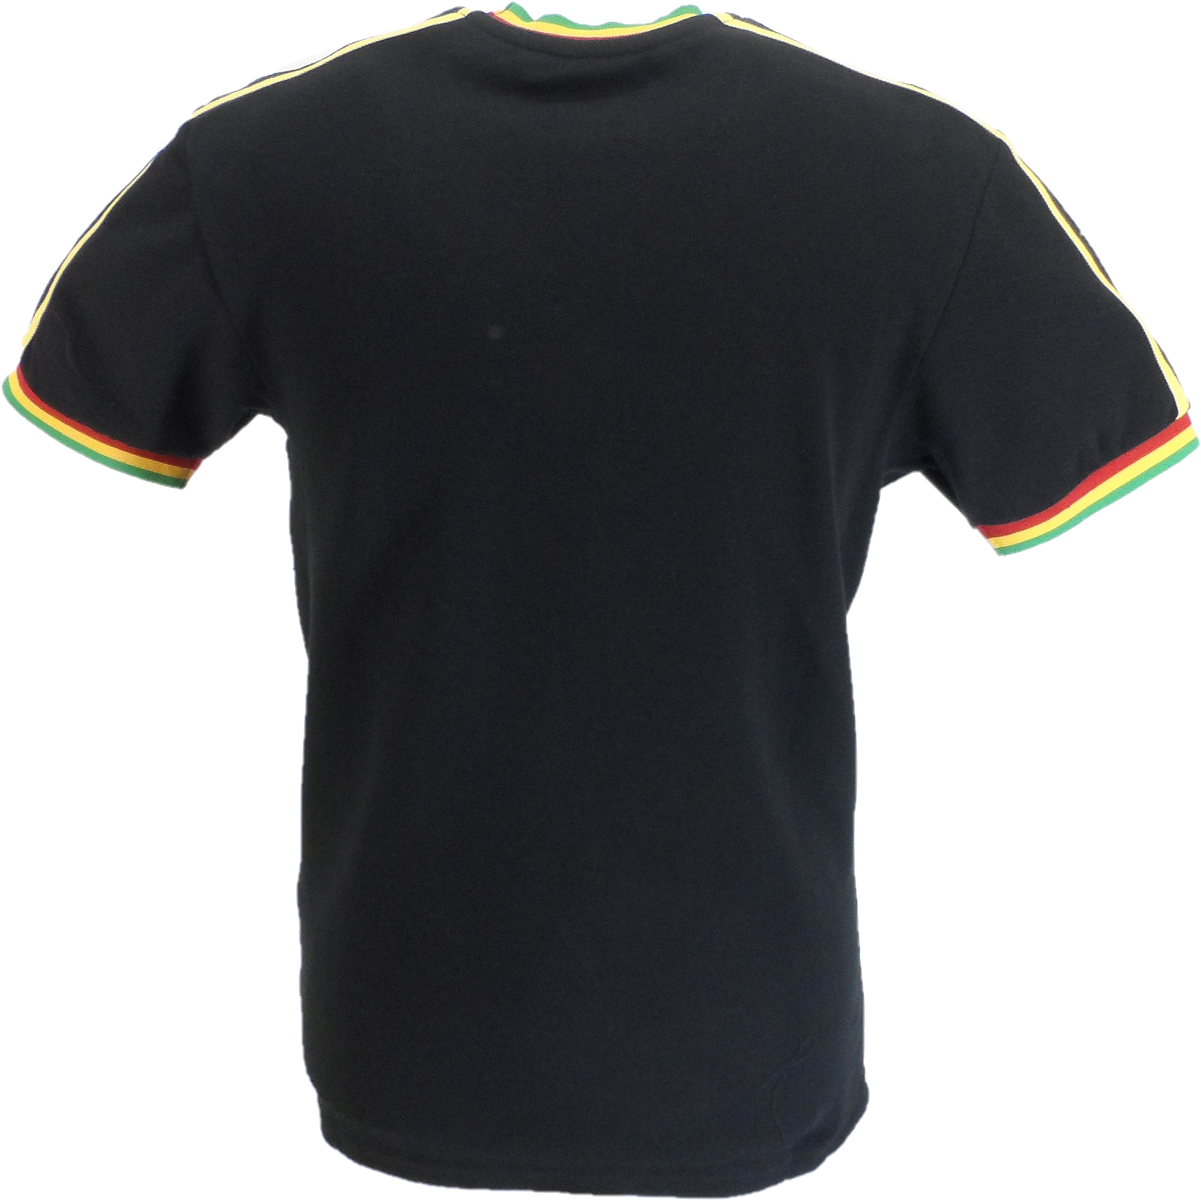 Trojan Mens Black Rasta Twin Stripe Ringer Pique Cotton T-Shirt